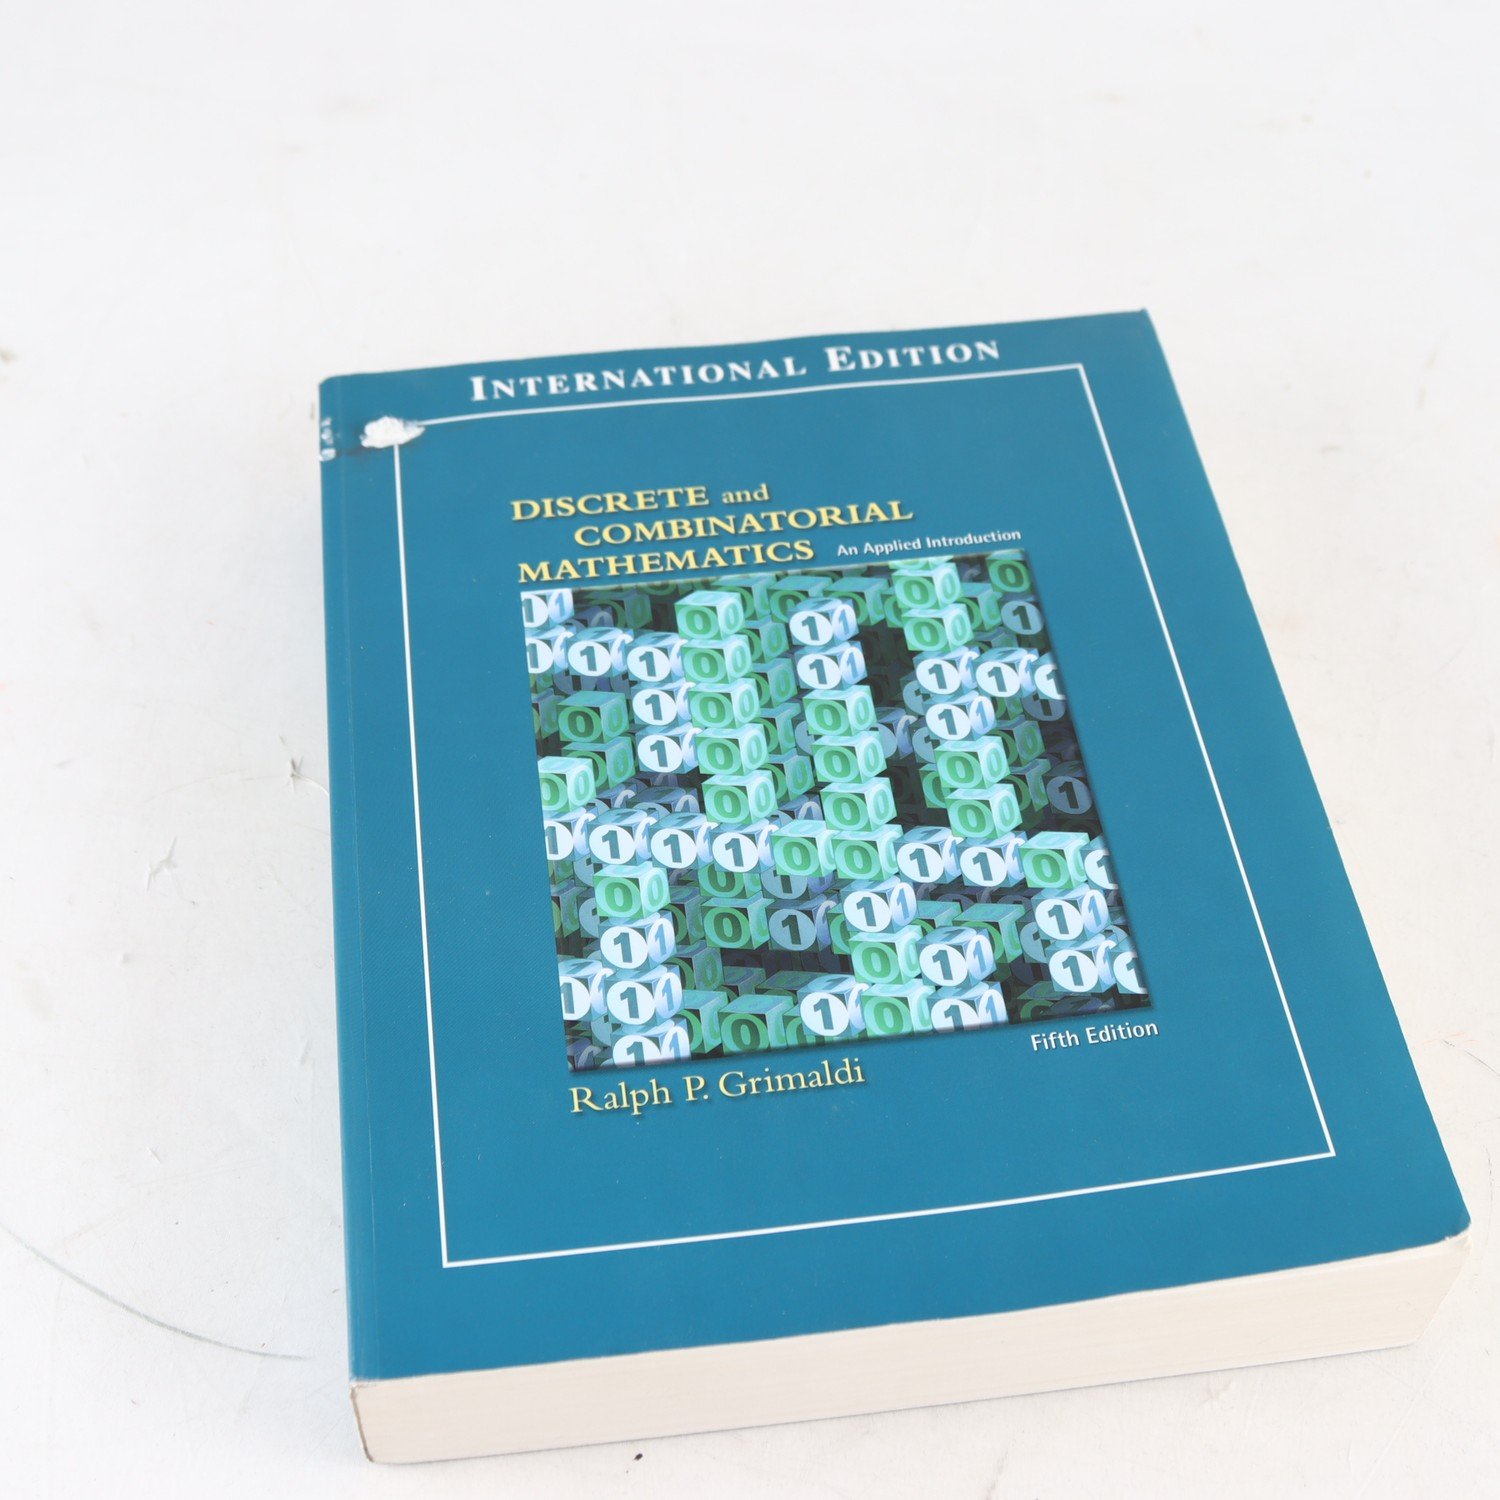 Discrete and combinatorial mathematics, Ralph P.Grimaldi